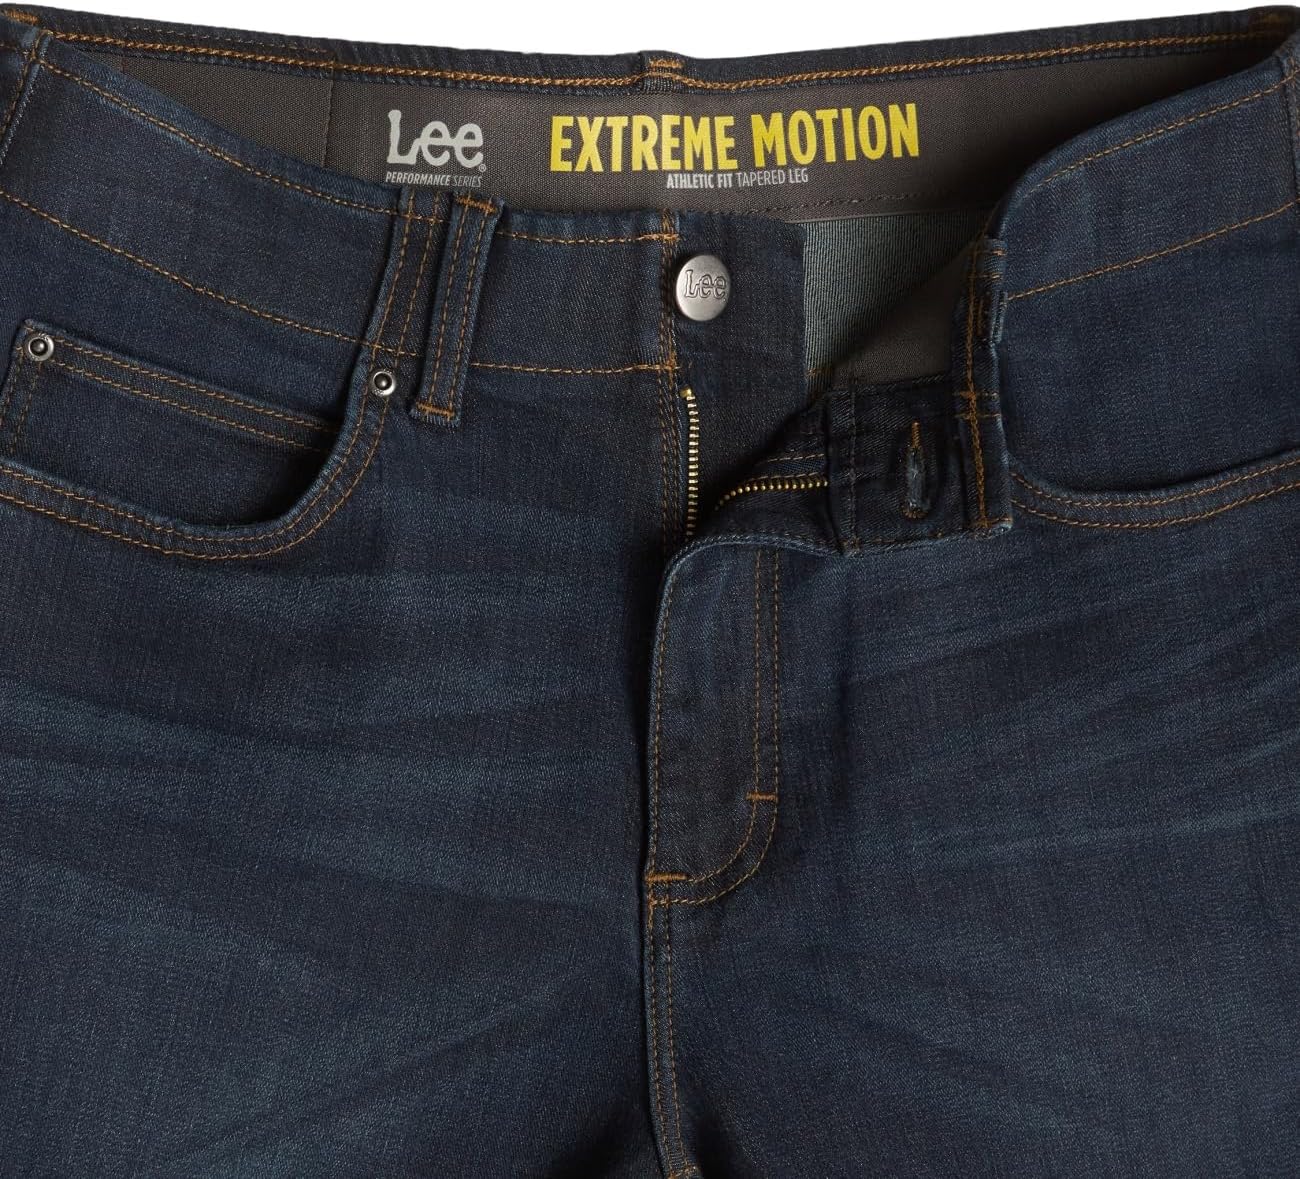 Lee Men's Modern Series Extreme Motion Athletic Jean, blue strike, 38W x 32L